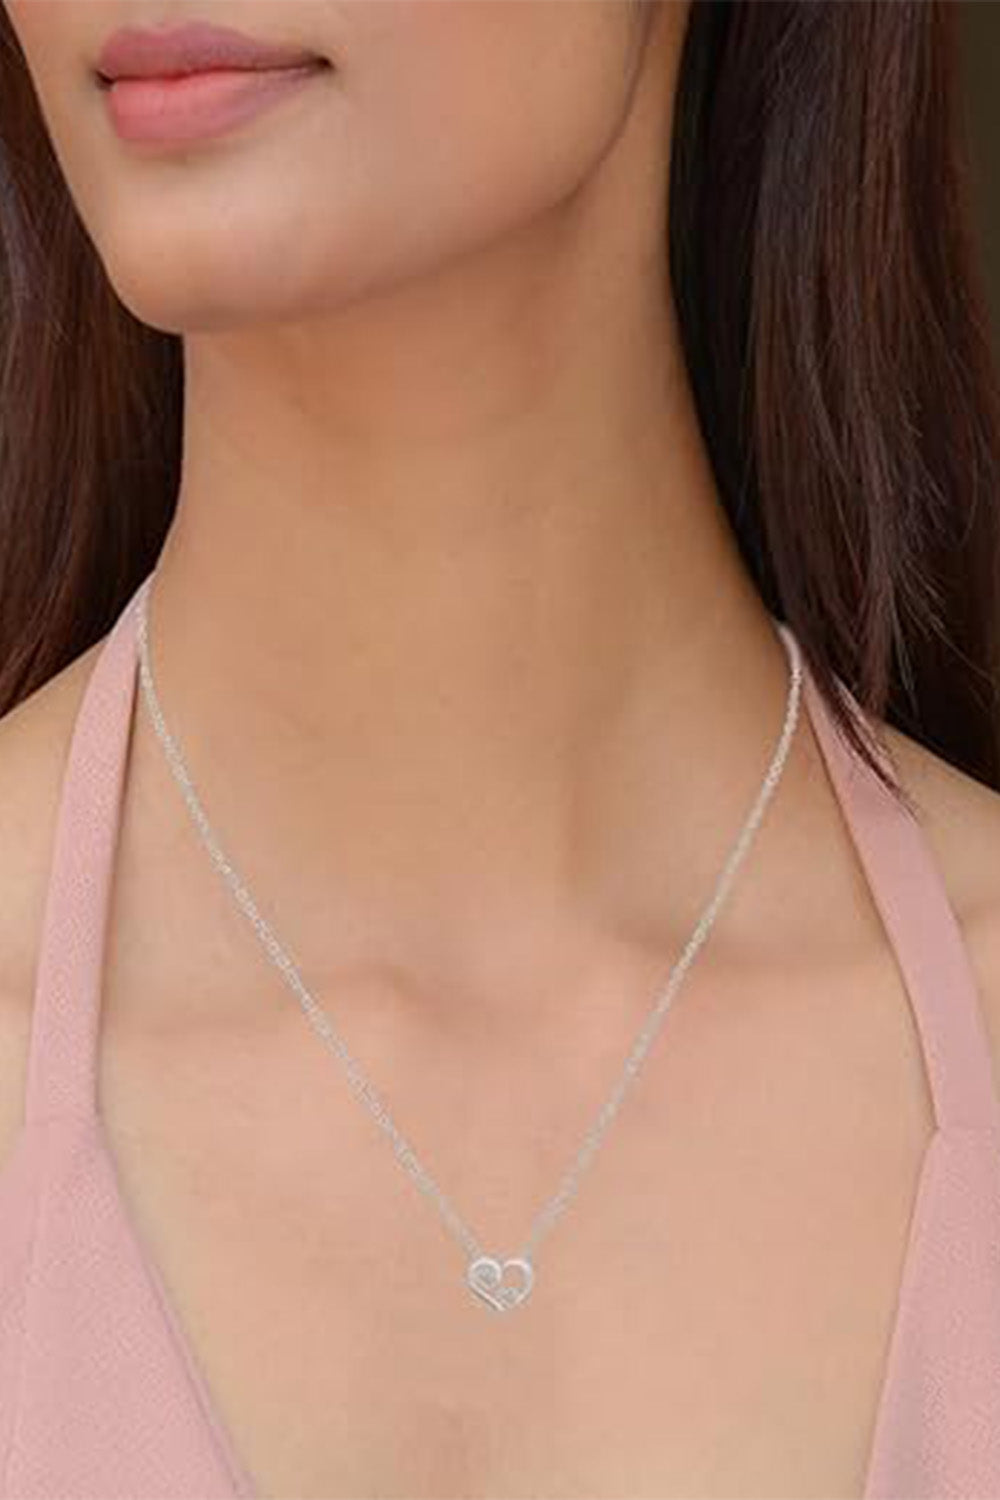 Yaathi Triple Heart Pendant Necklace, Buy Pendant Online 